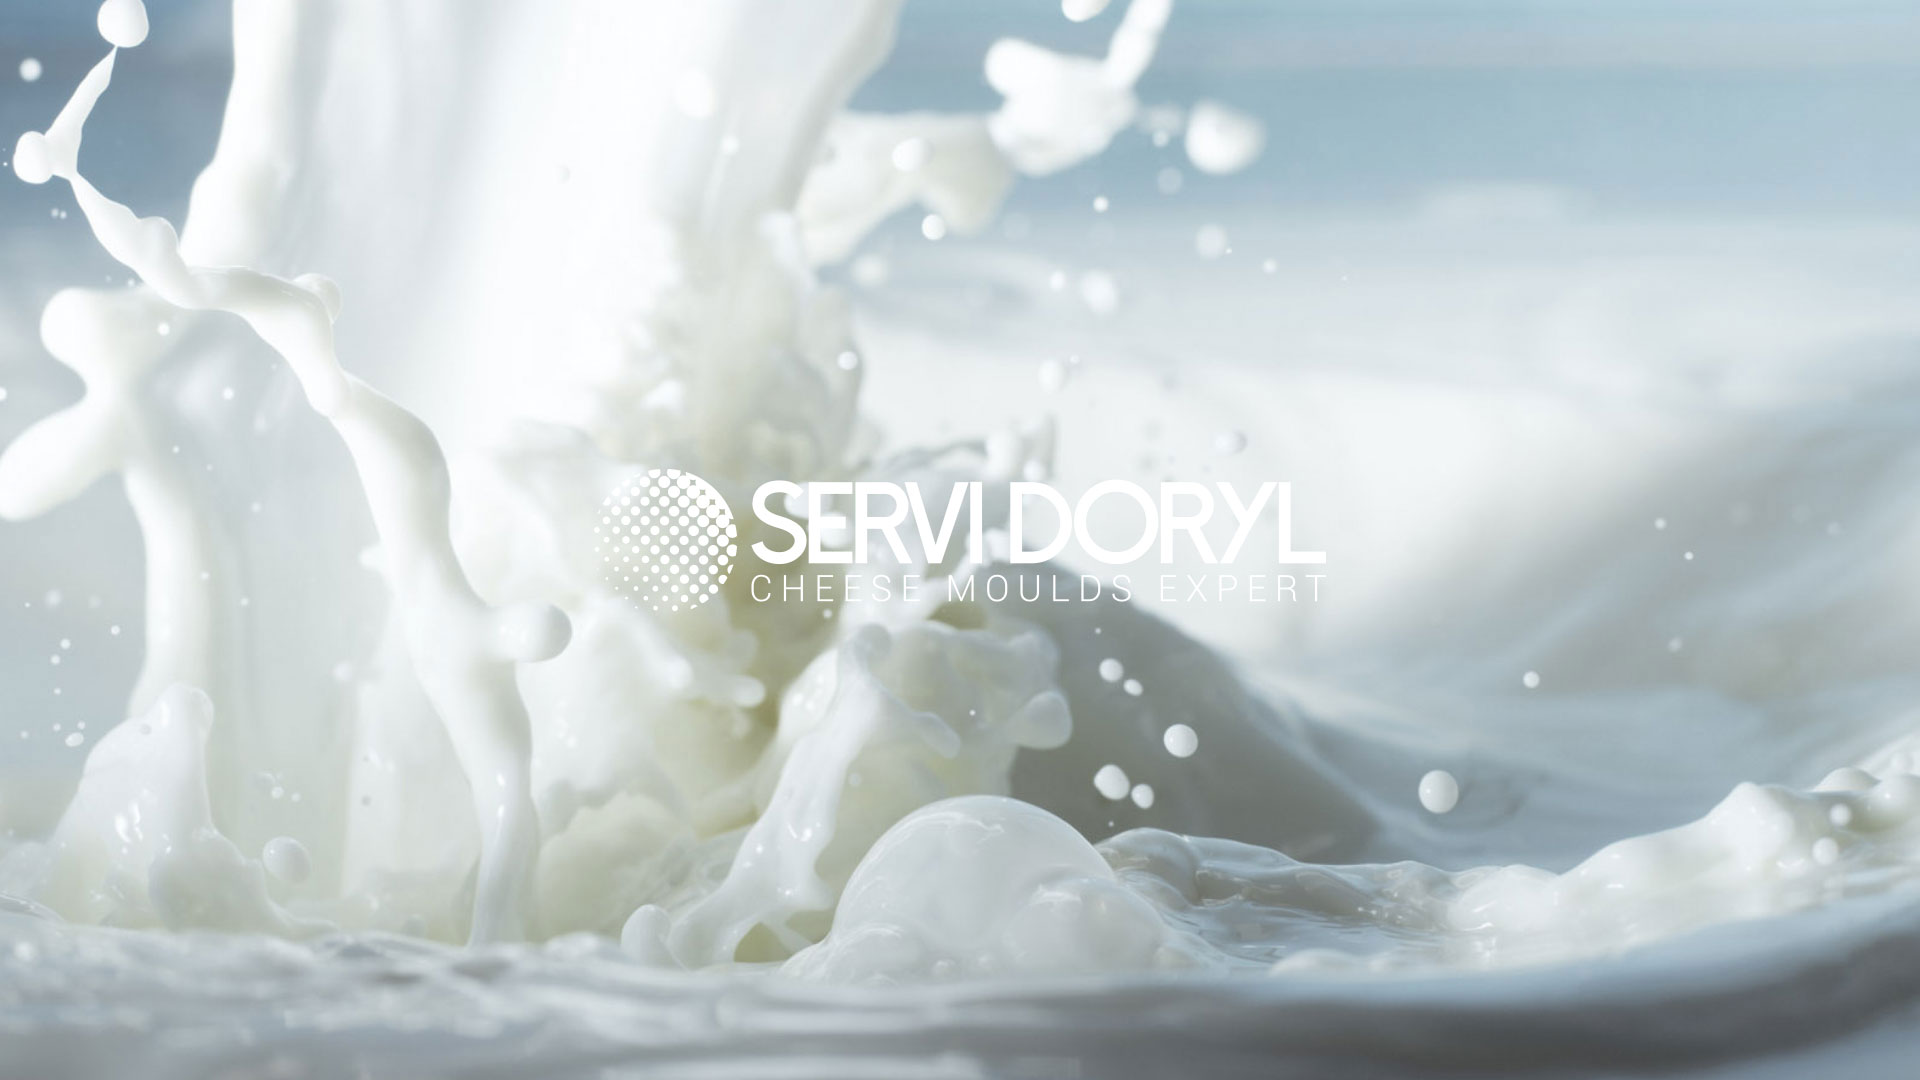 Ambiance et logo blanc Servi Doryl